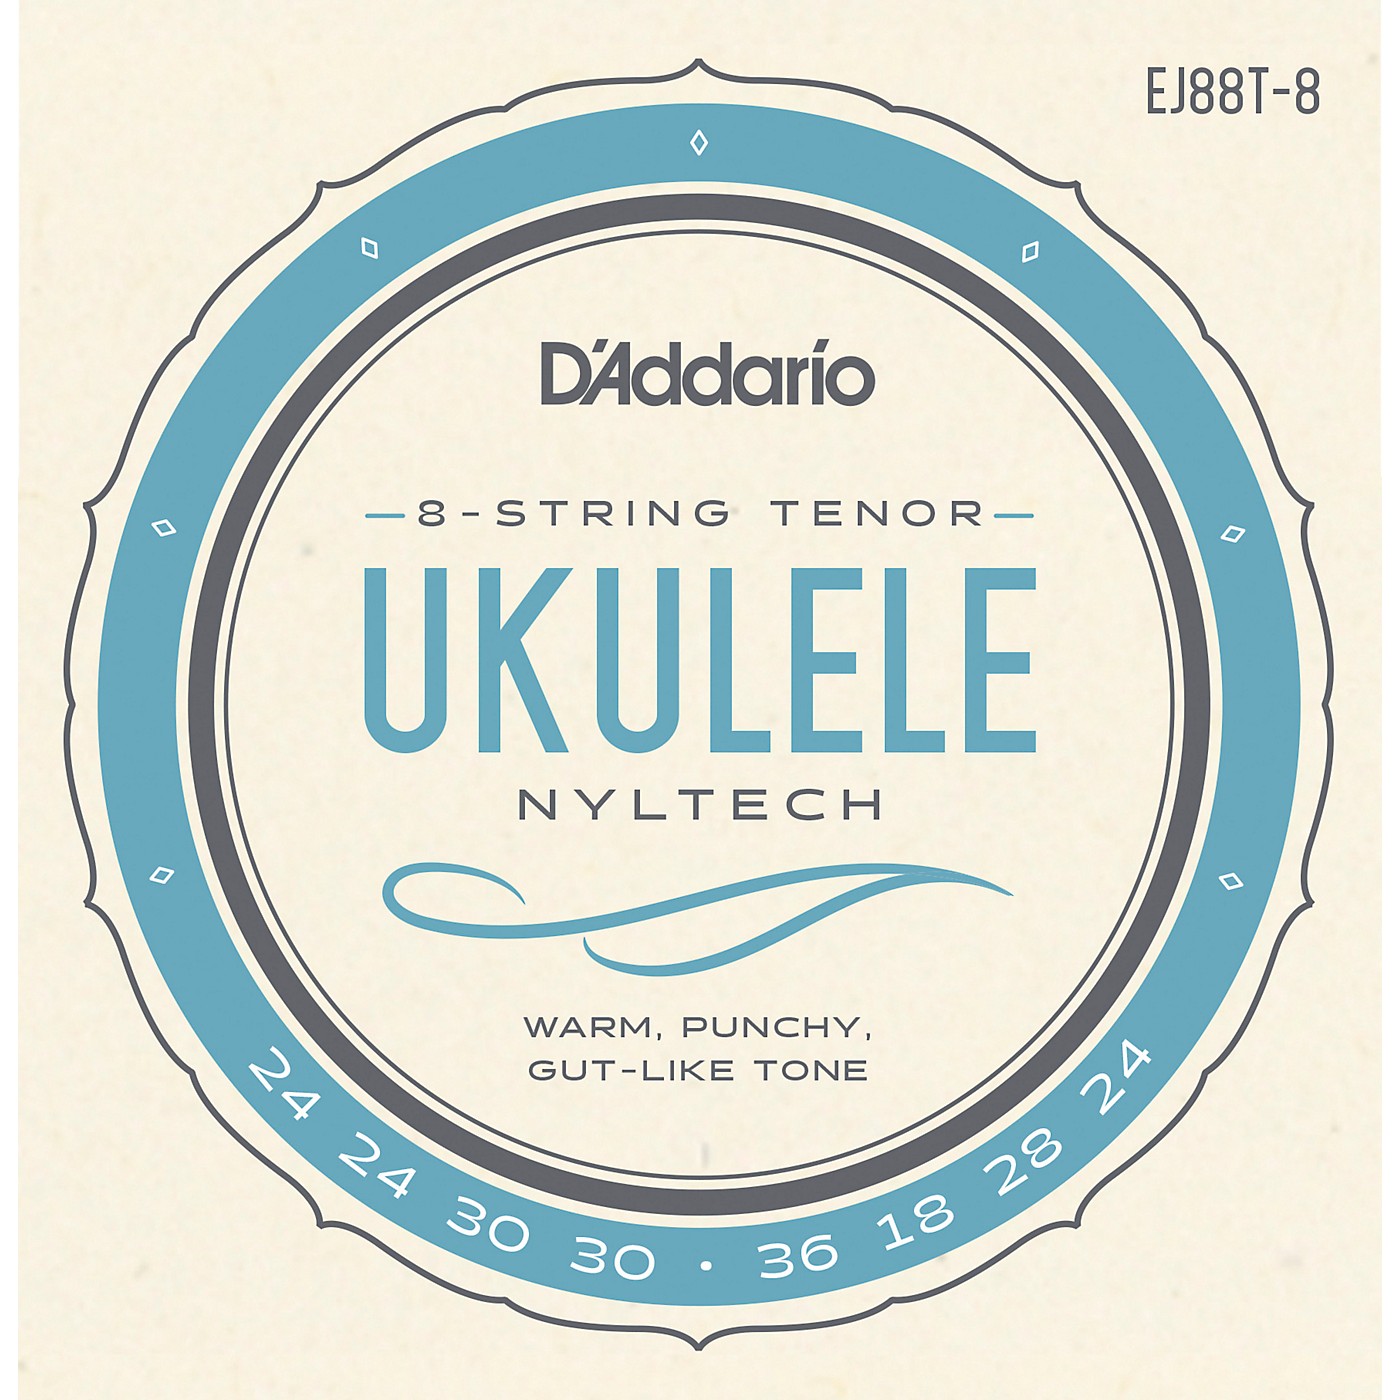 D'Addario D'Addario 8-String Nyltech Ukulele Strings thumbnail